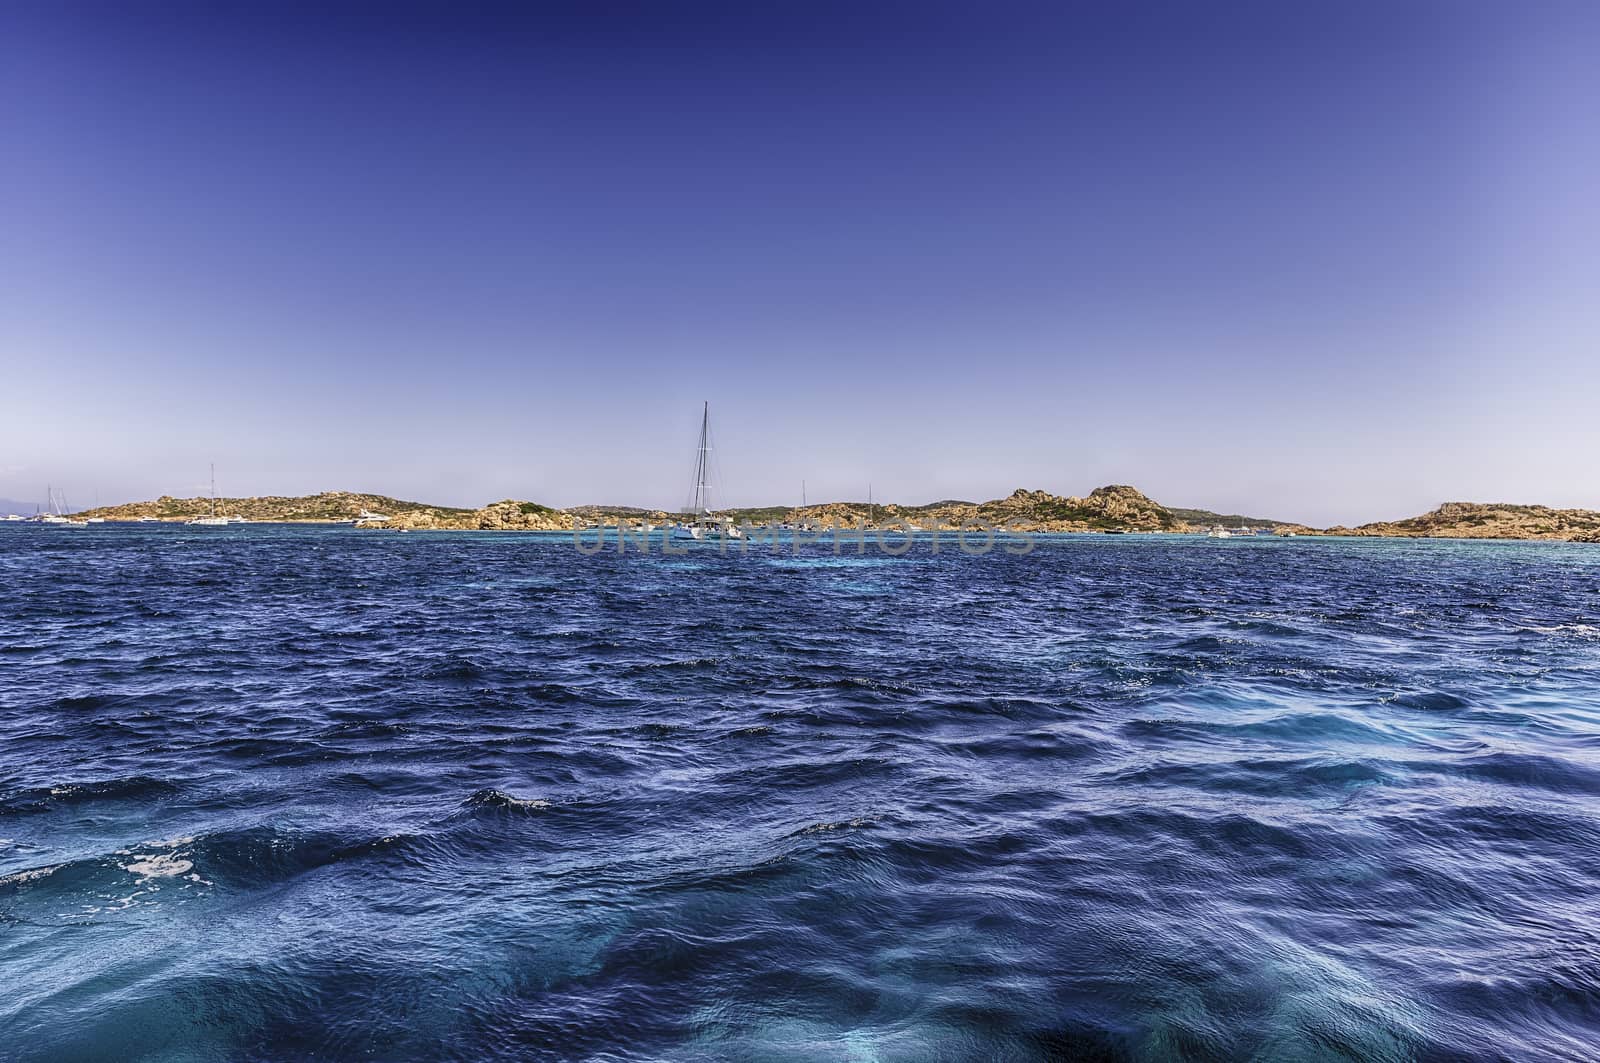 View of the Island of Budelli, Maddalena Archipelago, Sardinia,  by marcorubino